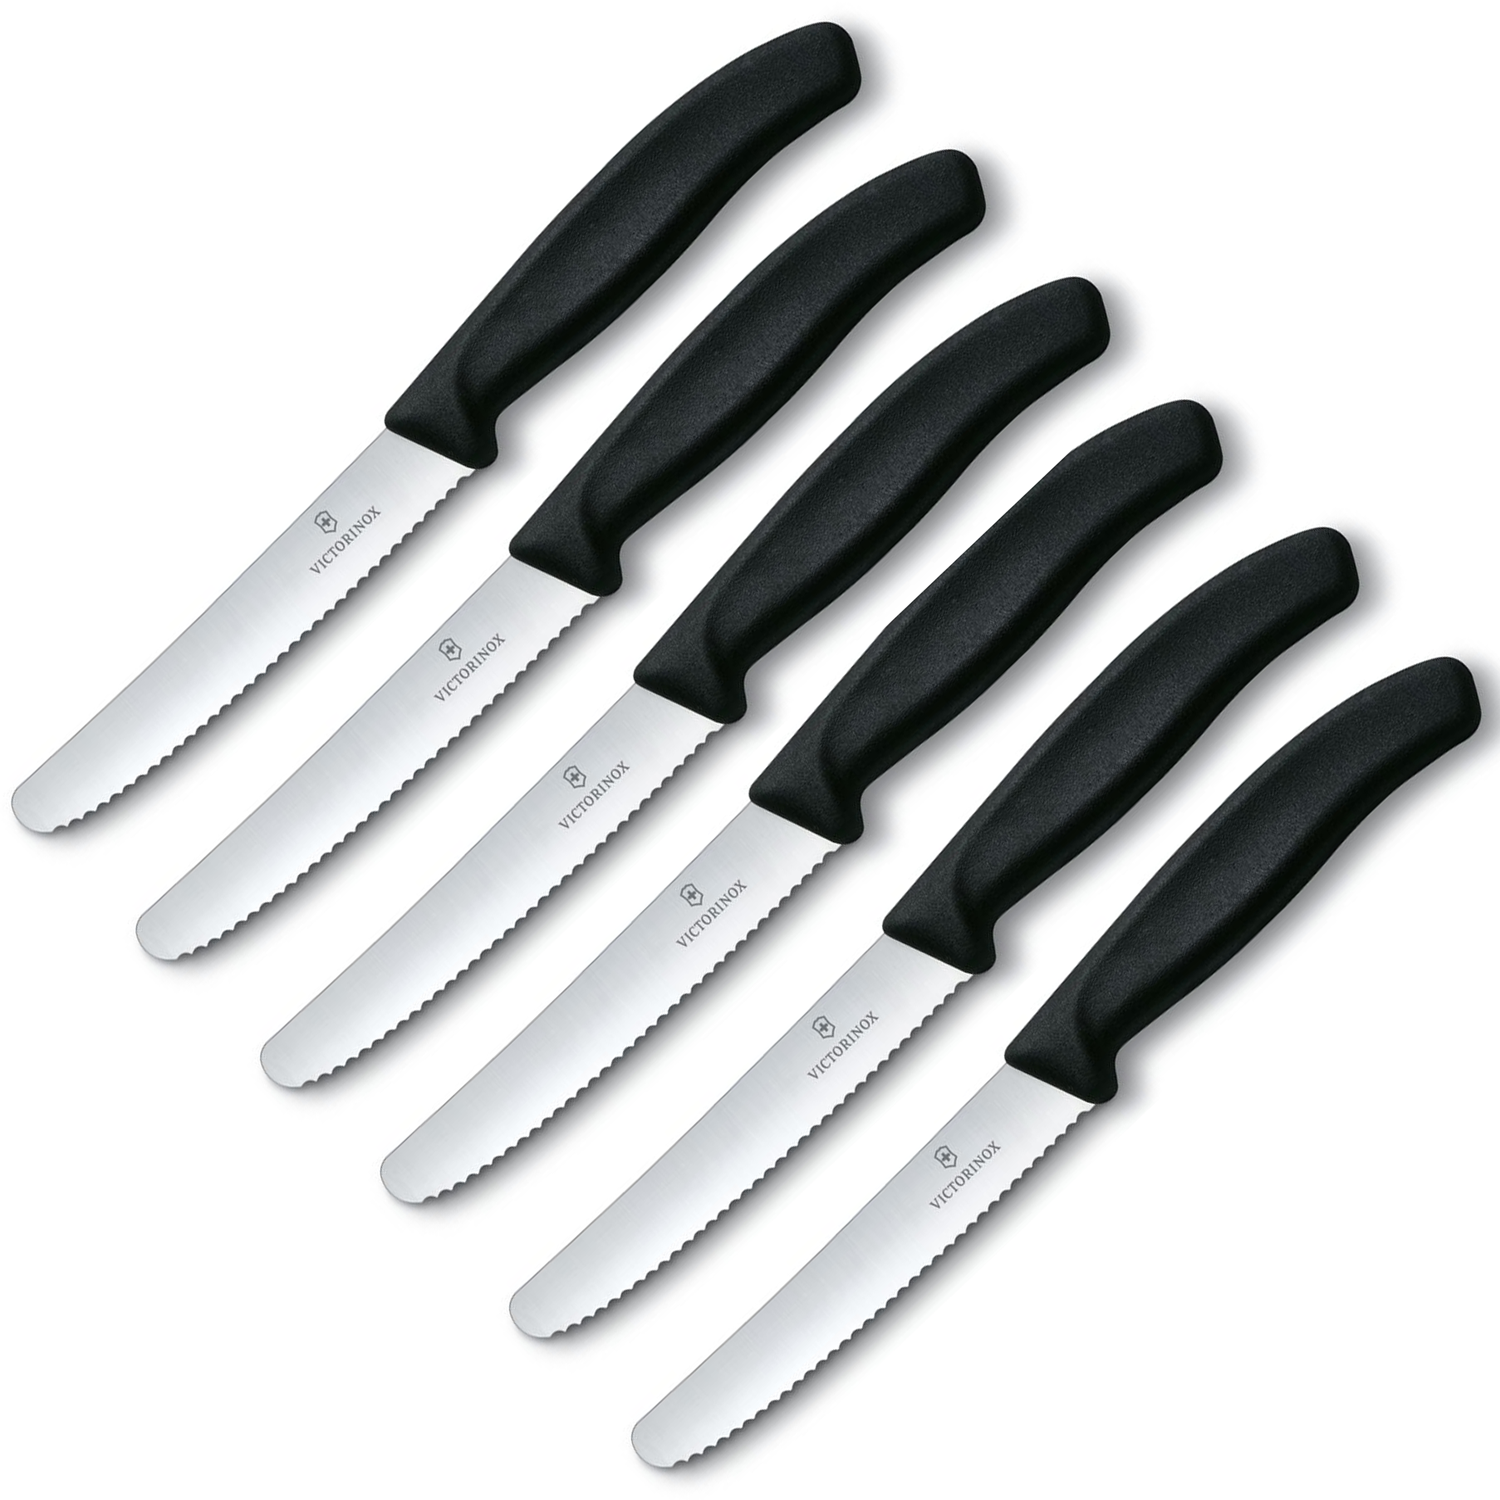 Victorinox Swiss Classic 6-Piece Steak Set - Durable Knives with Stainless  Steel Blades - Kitchen Utensils